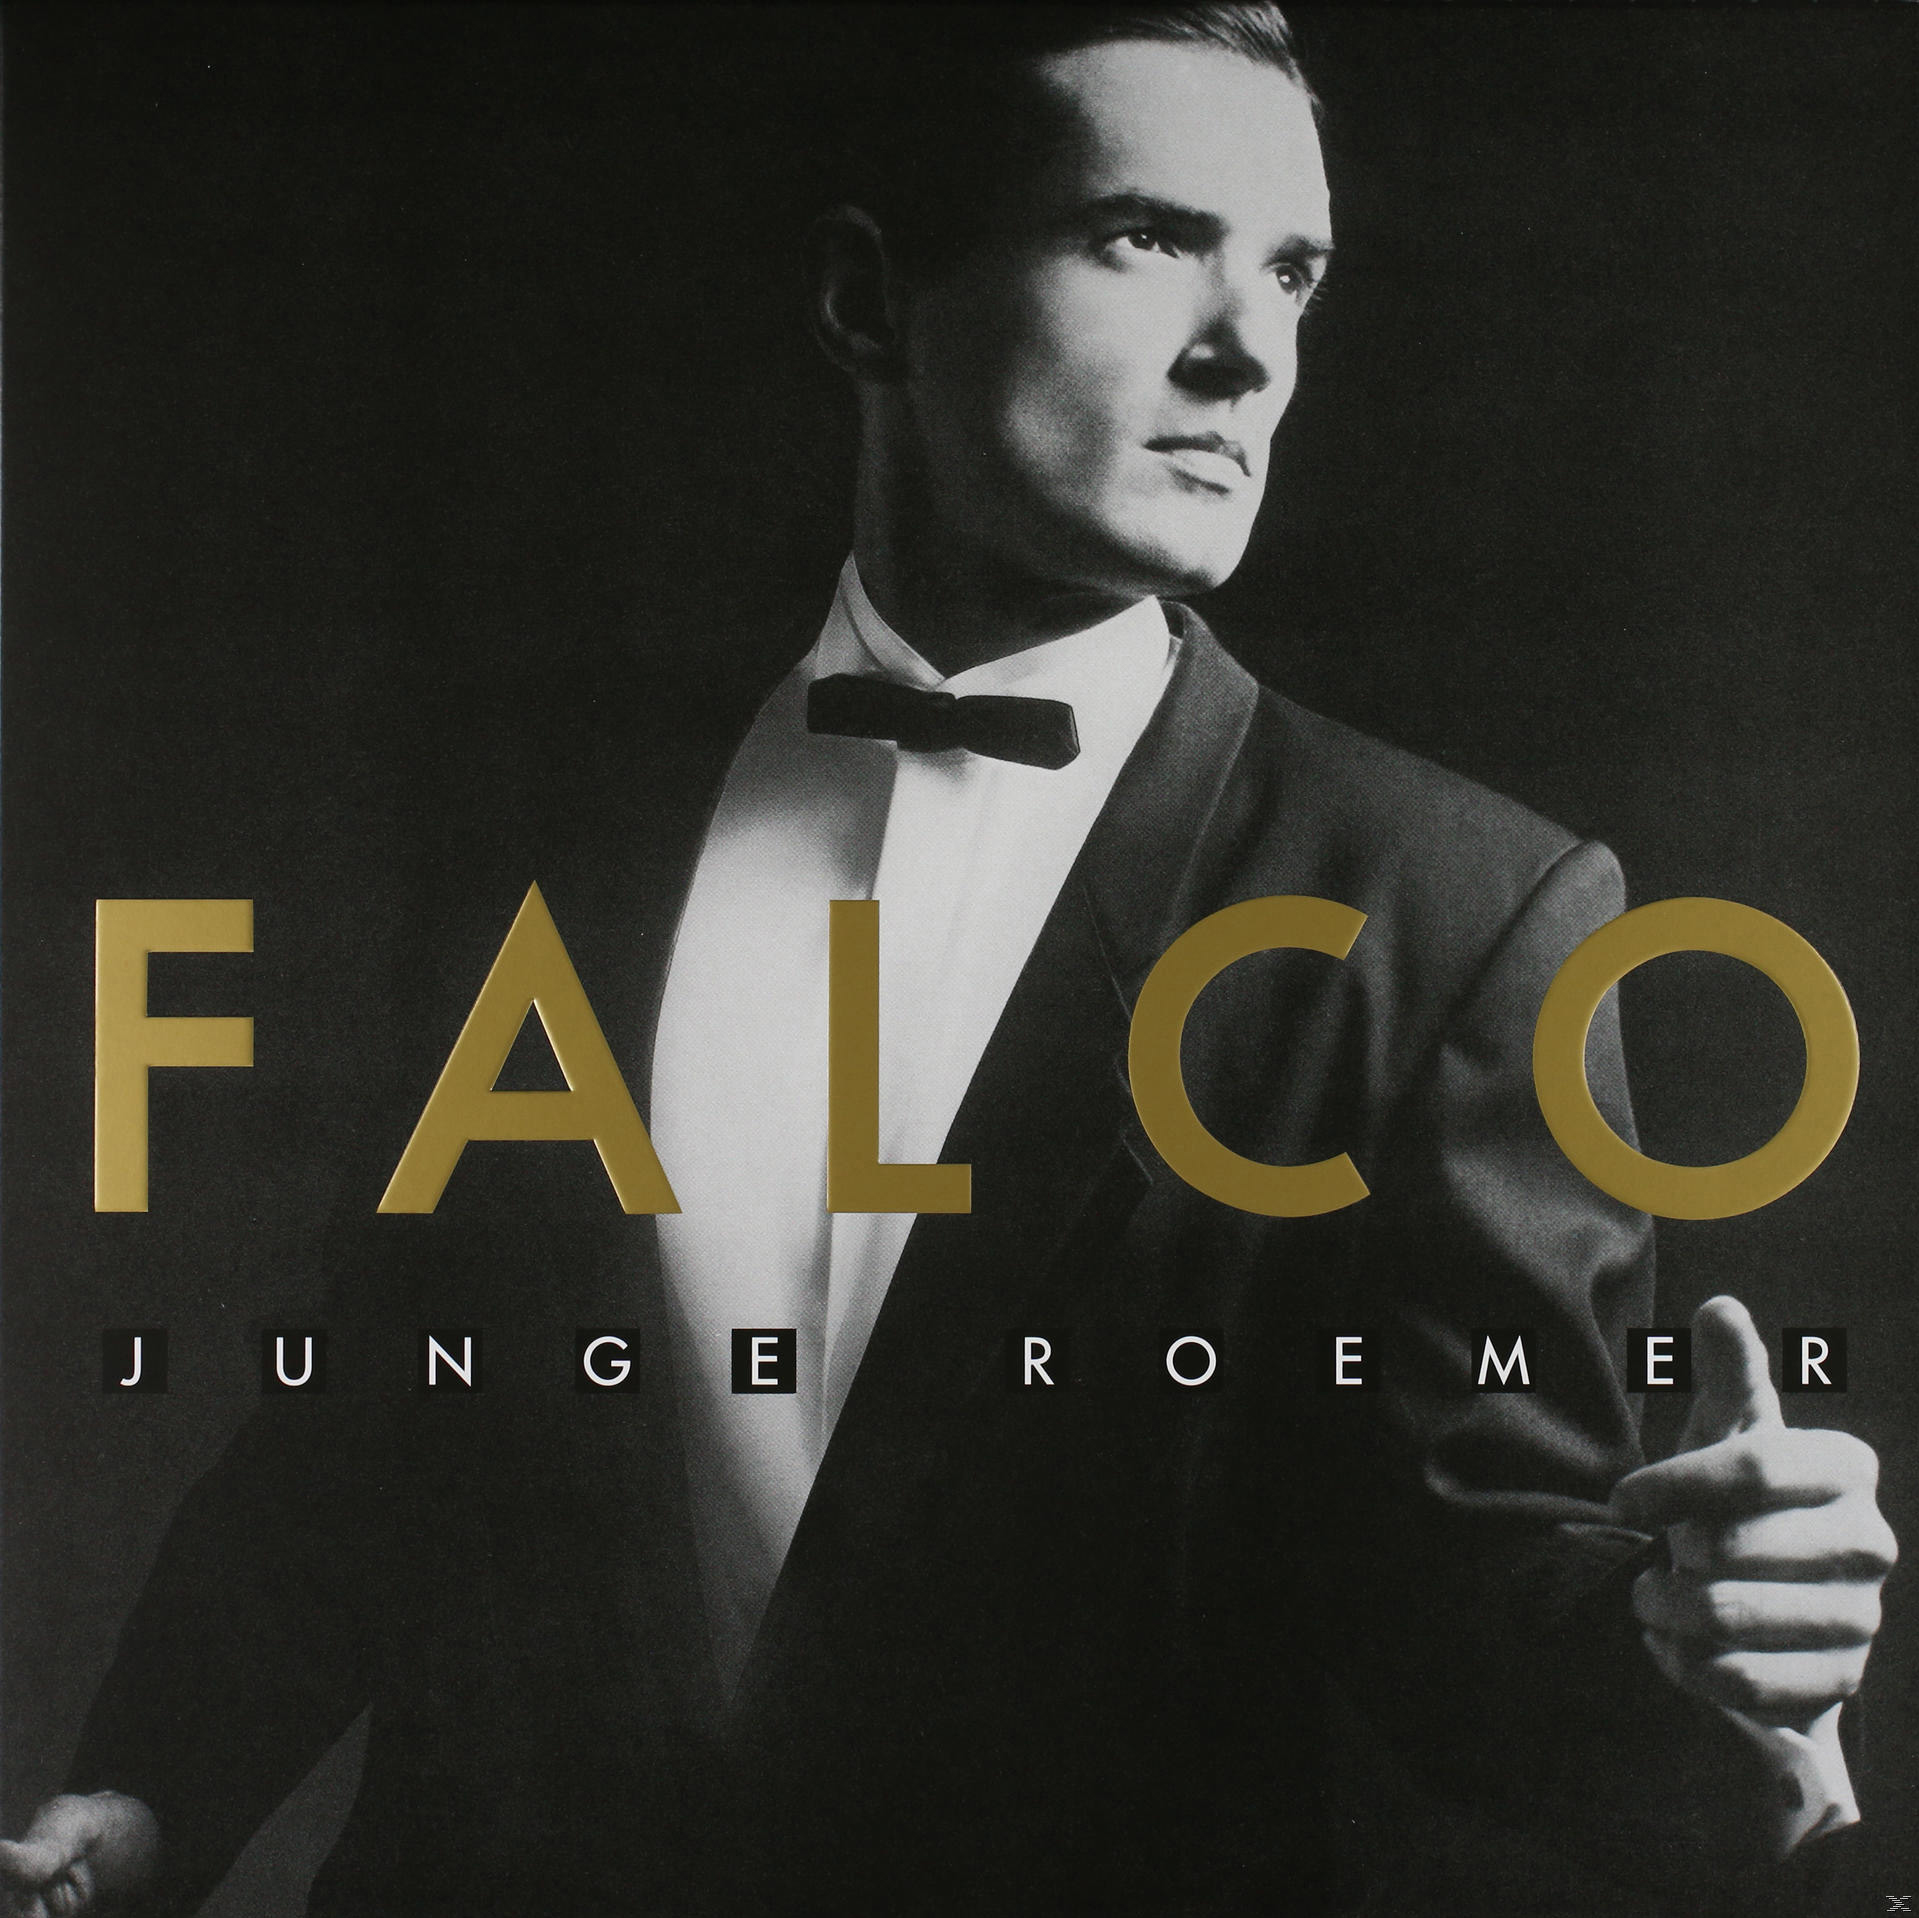 Roemer Junge - Falco - (Vinyl)